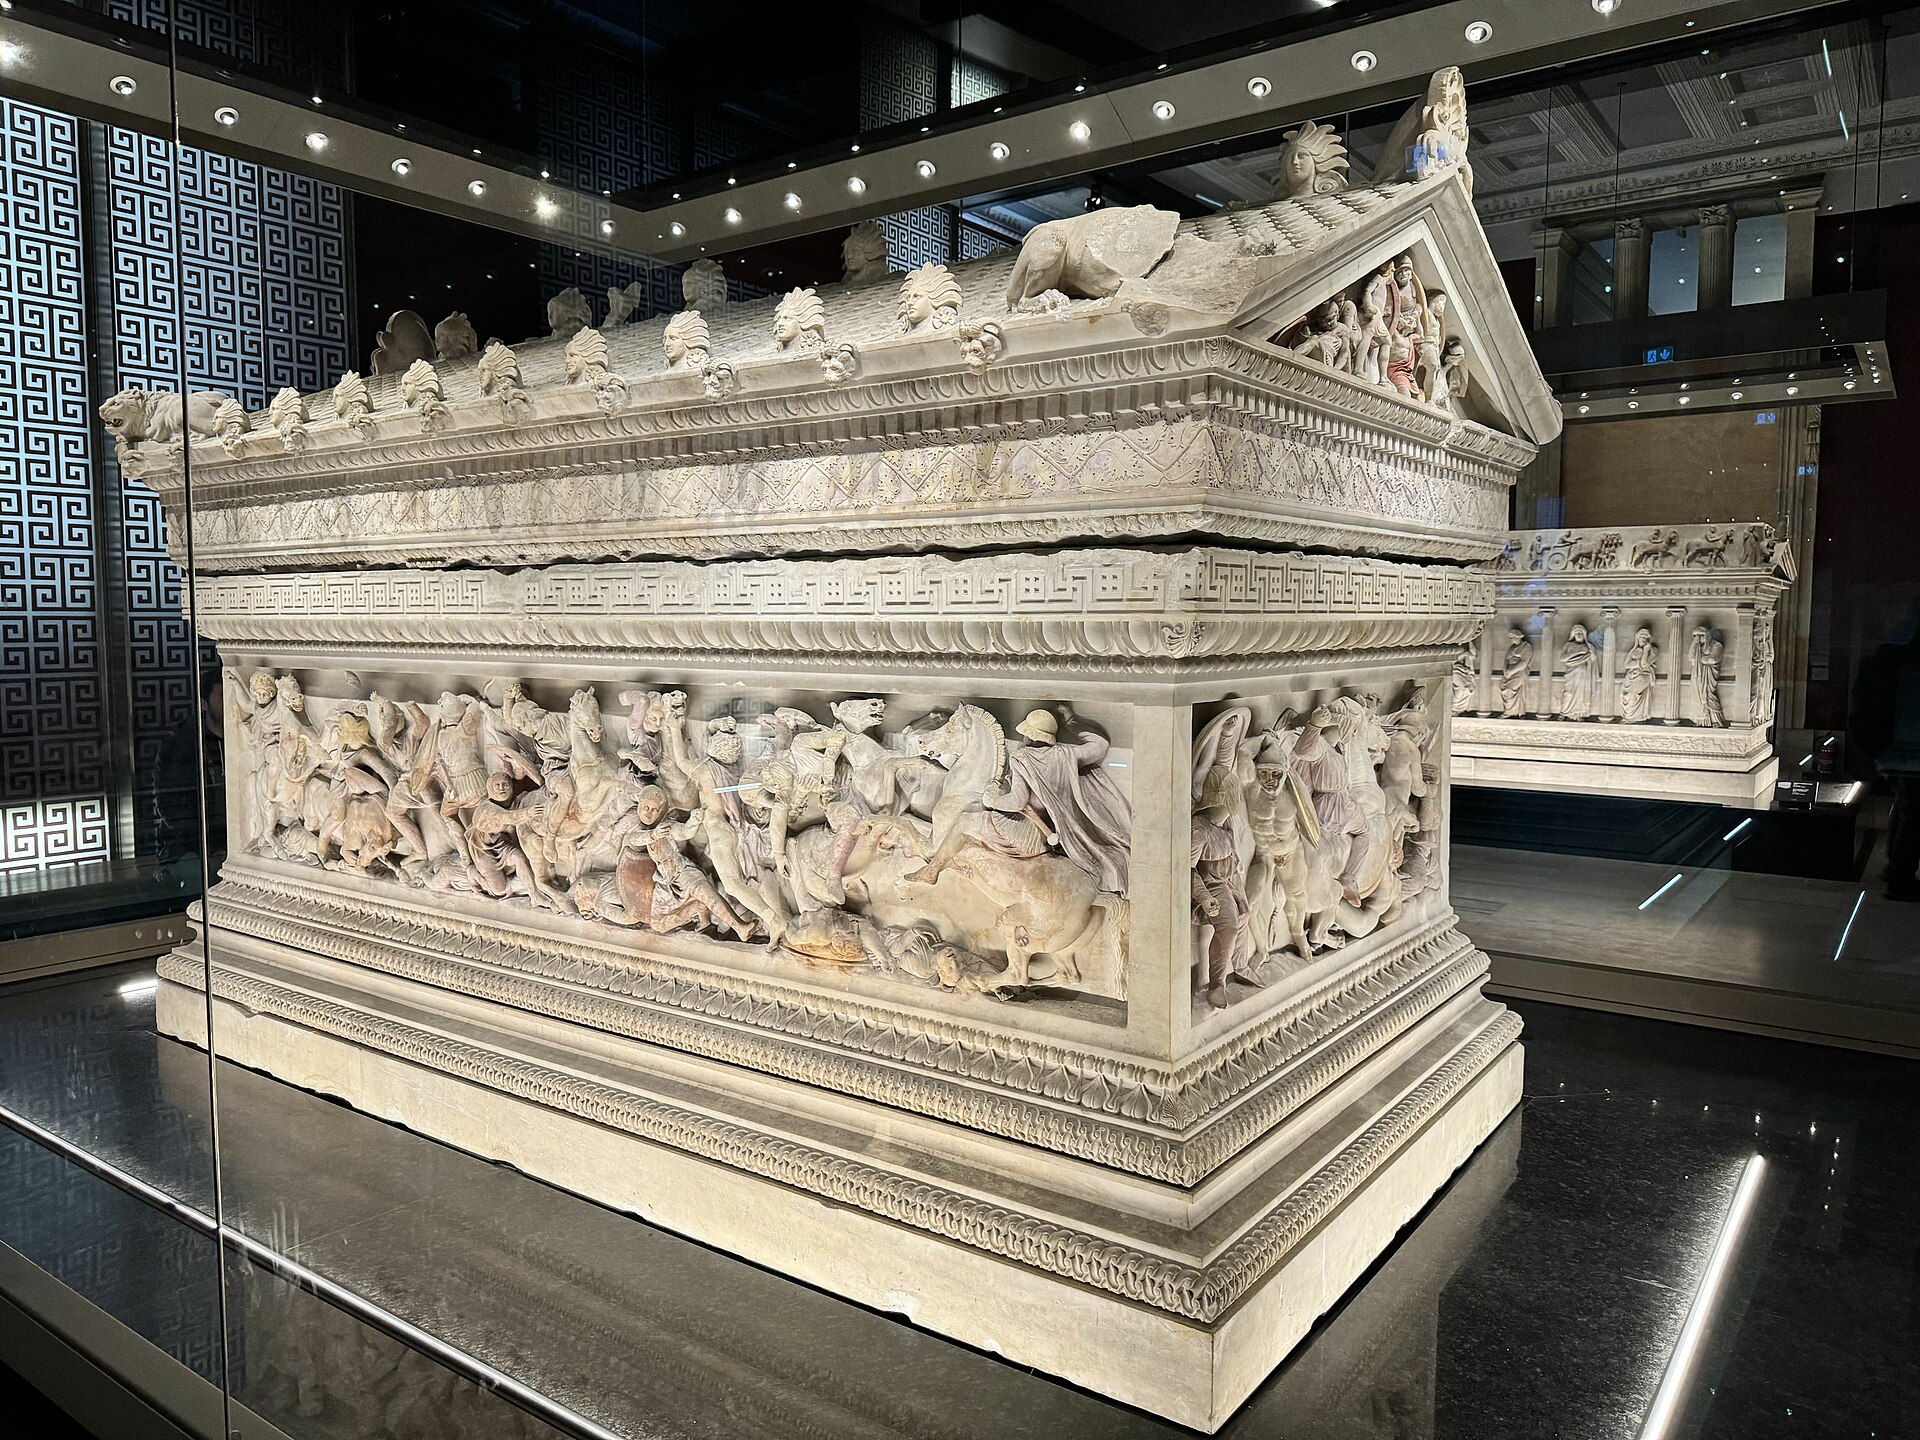 Large stone sarcophagus